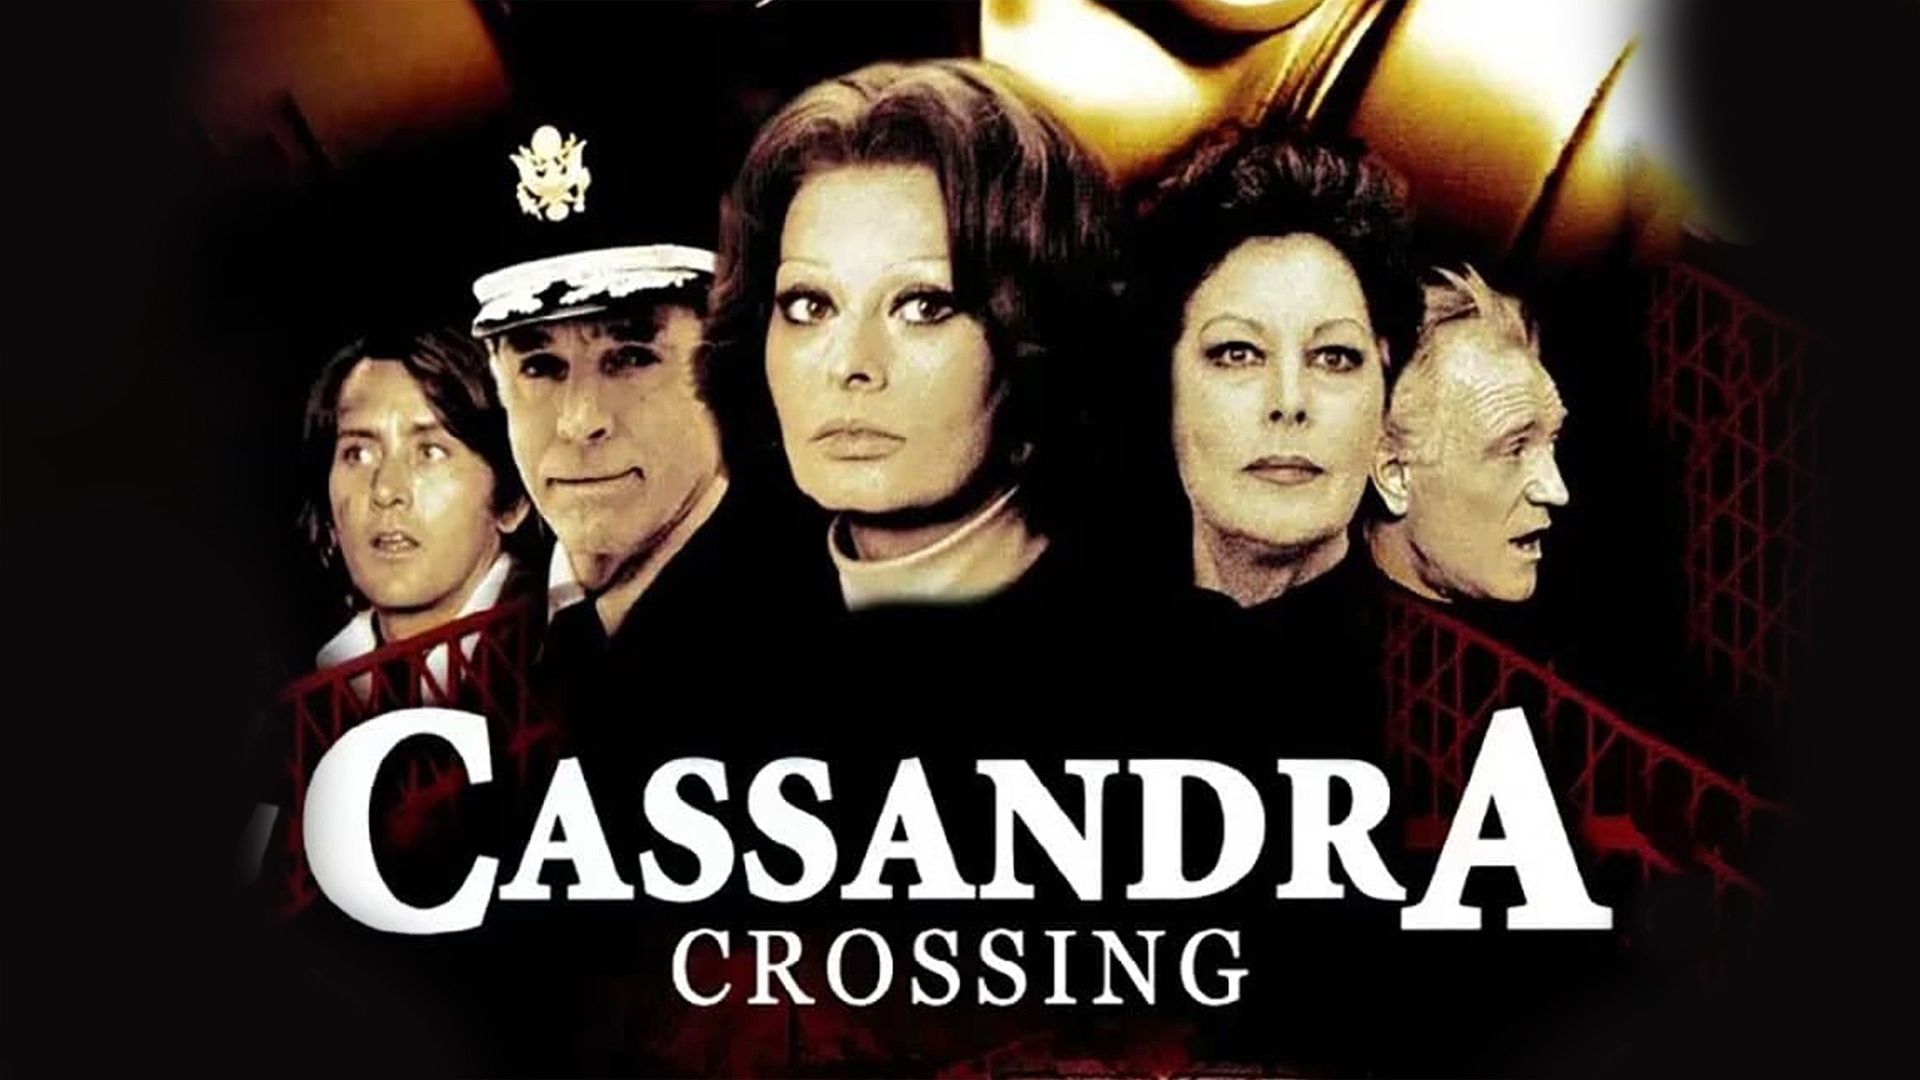 The Cassandra Crossing Backdrop